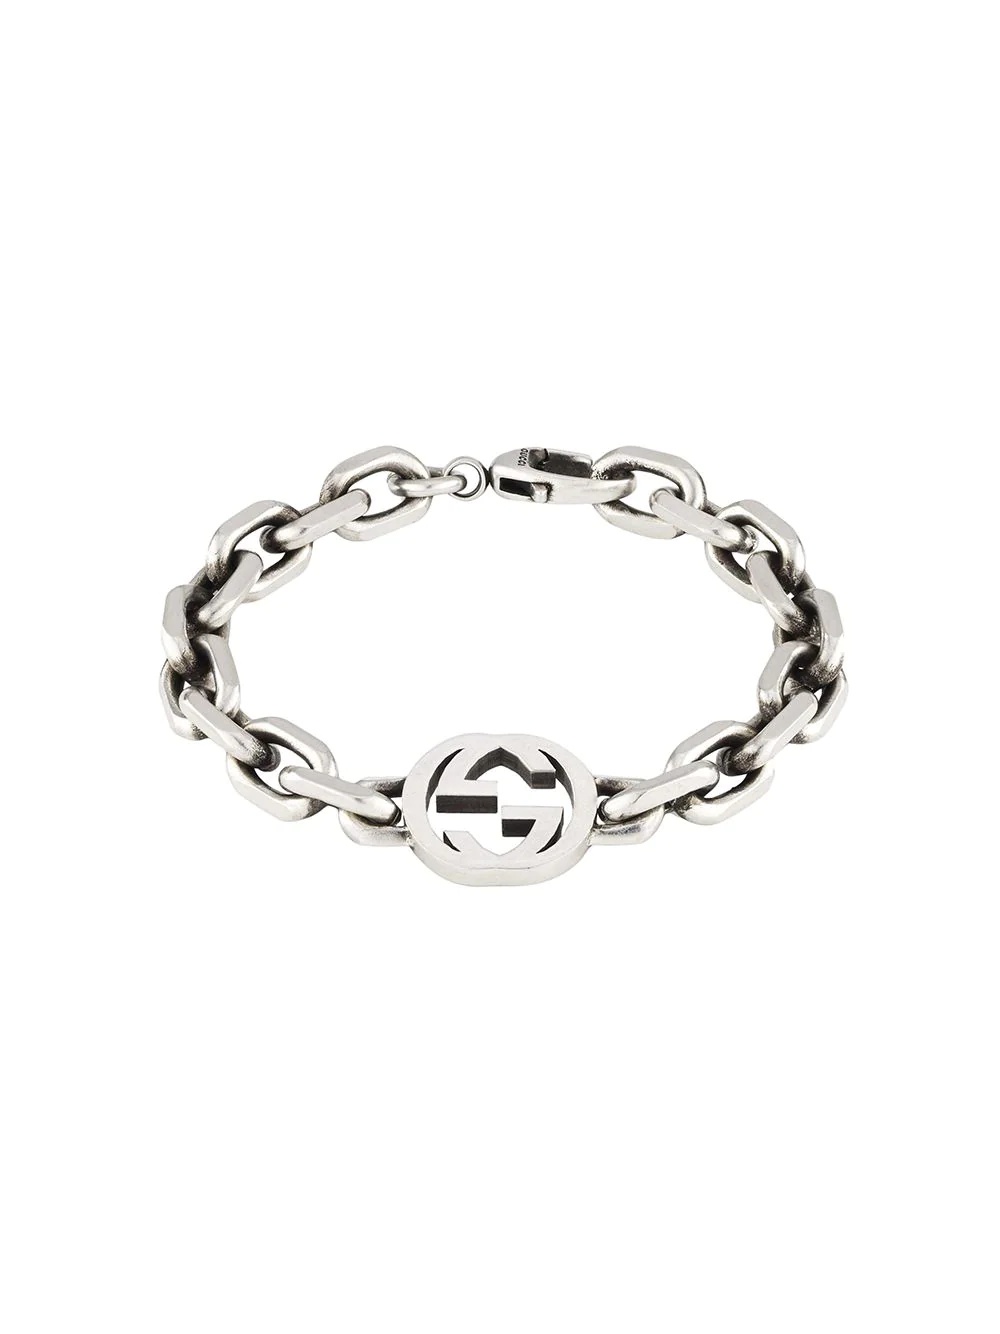 Sterling silver Interlocking G bracelet - 1